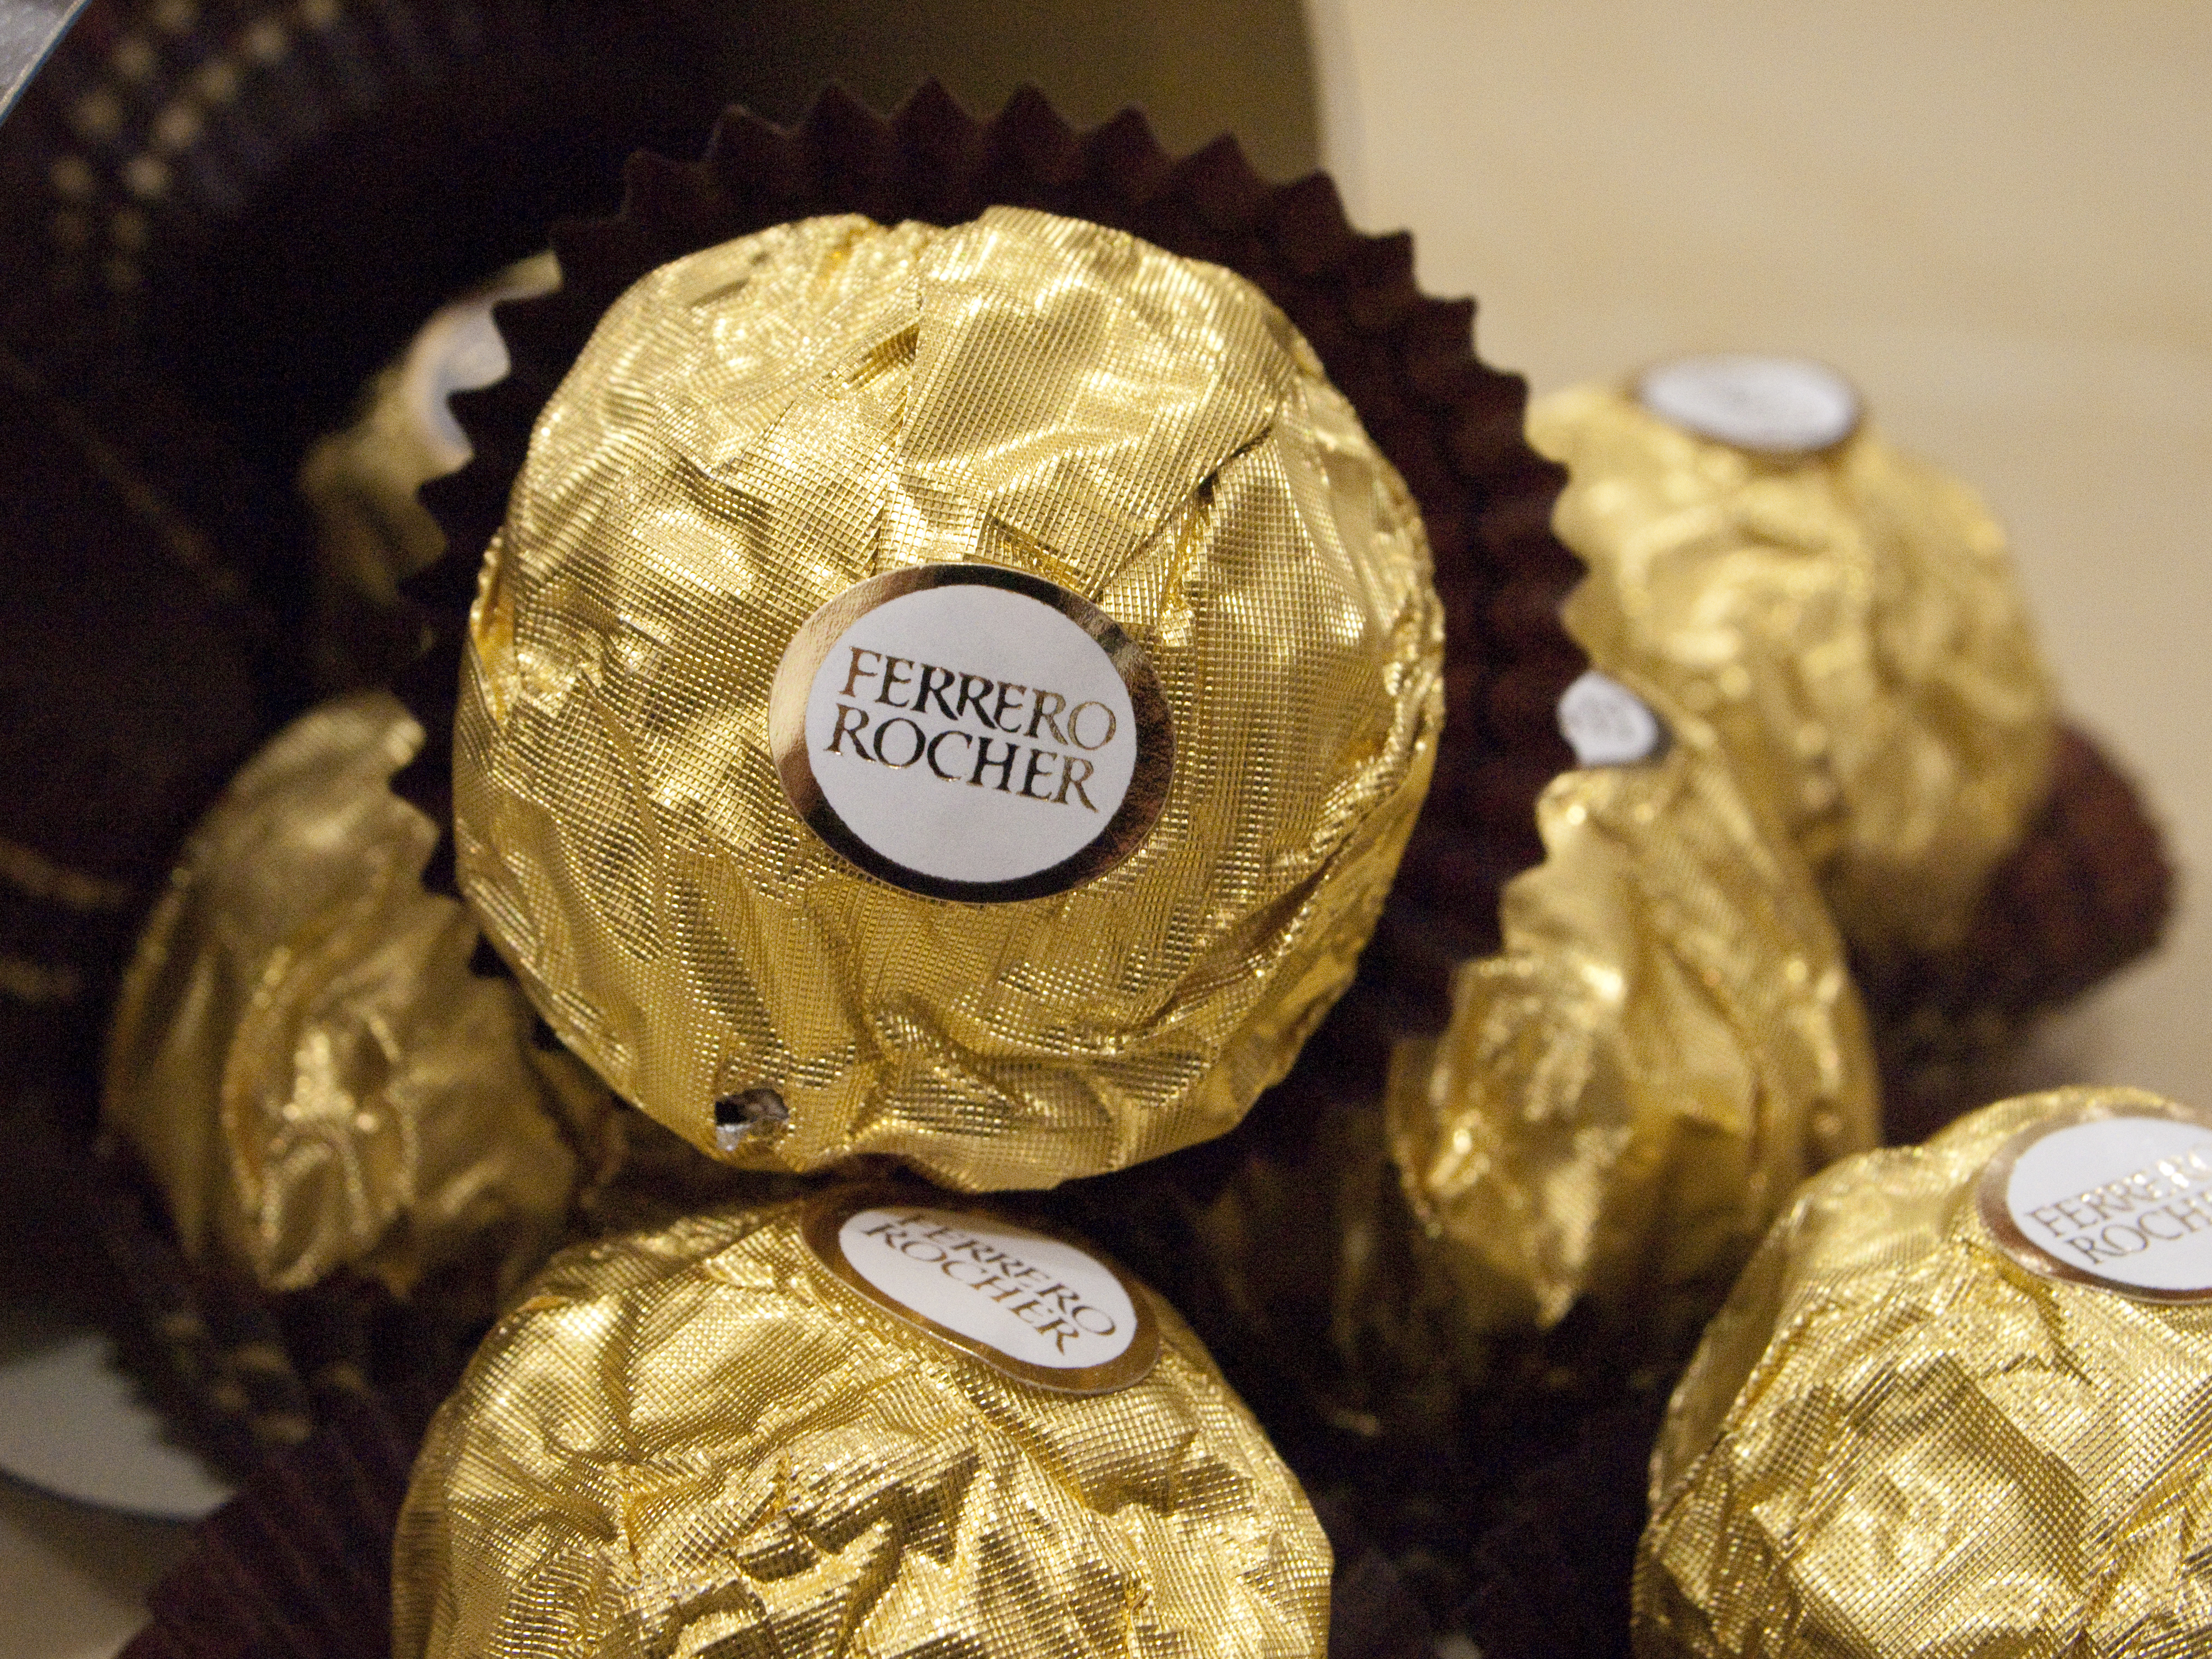 Ferrero rocher. Chocolates All Around [C.A.A.]